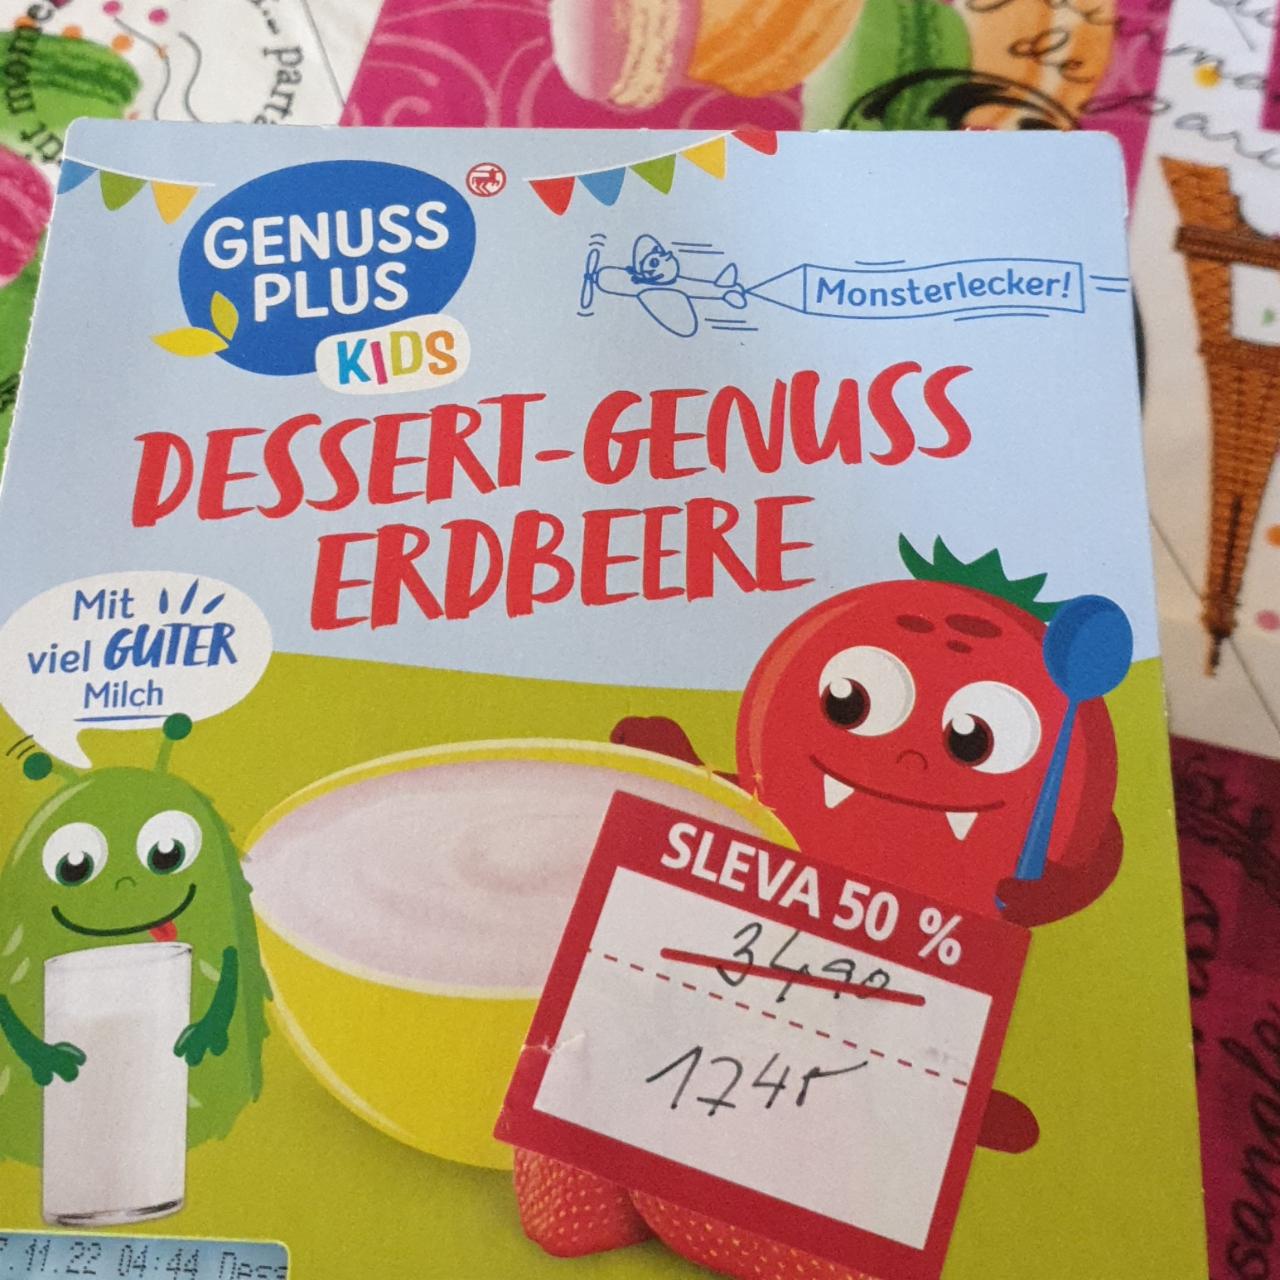 Fotografie - Dessert-Genuss Erdbeere Genuss plus kids